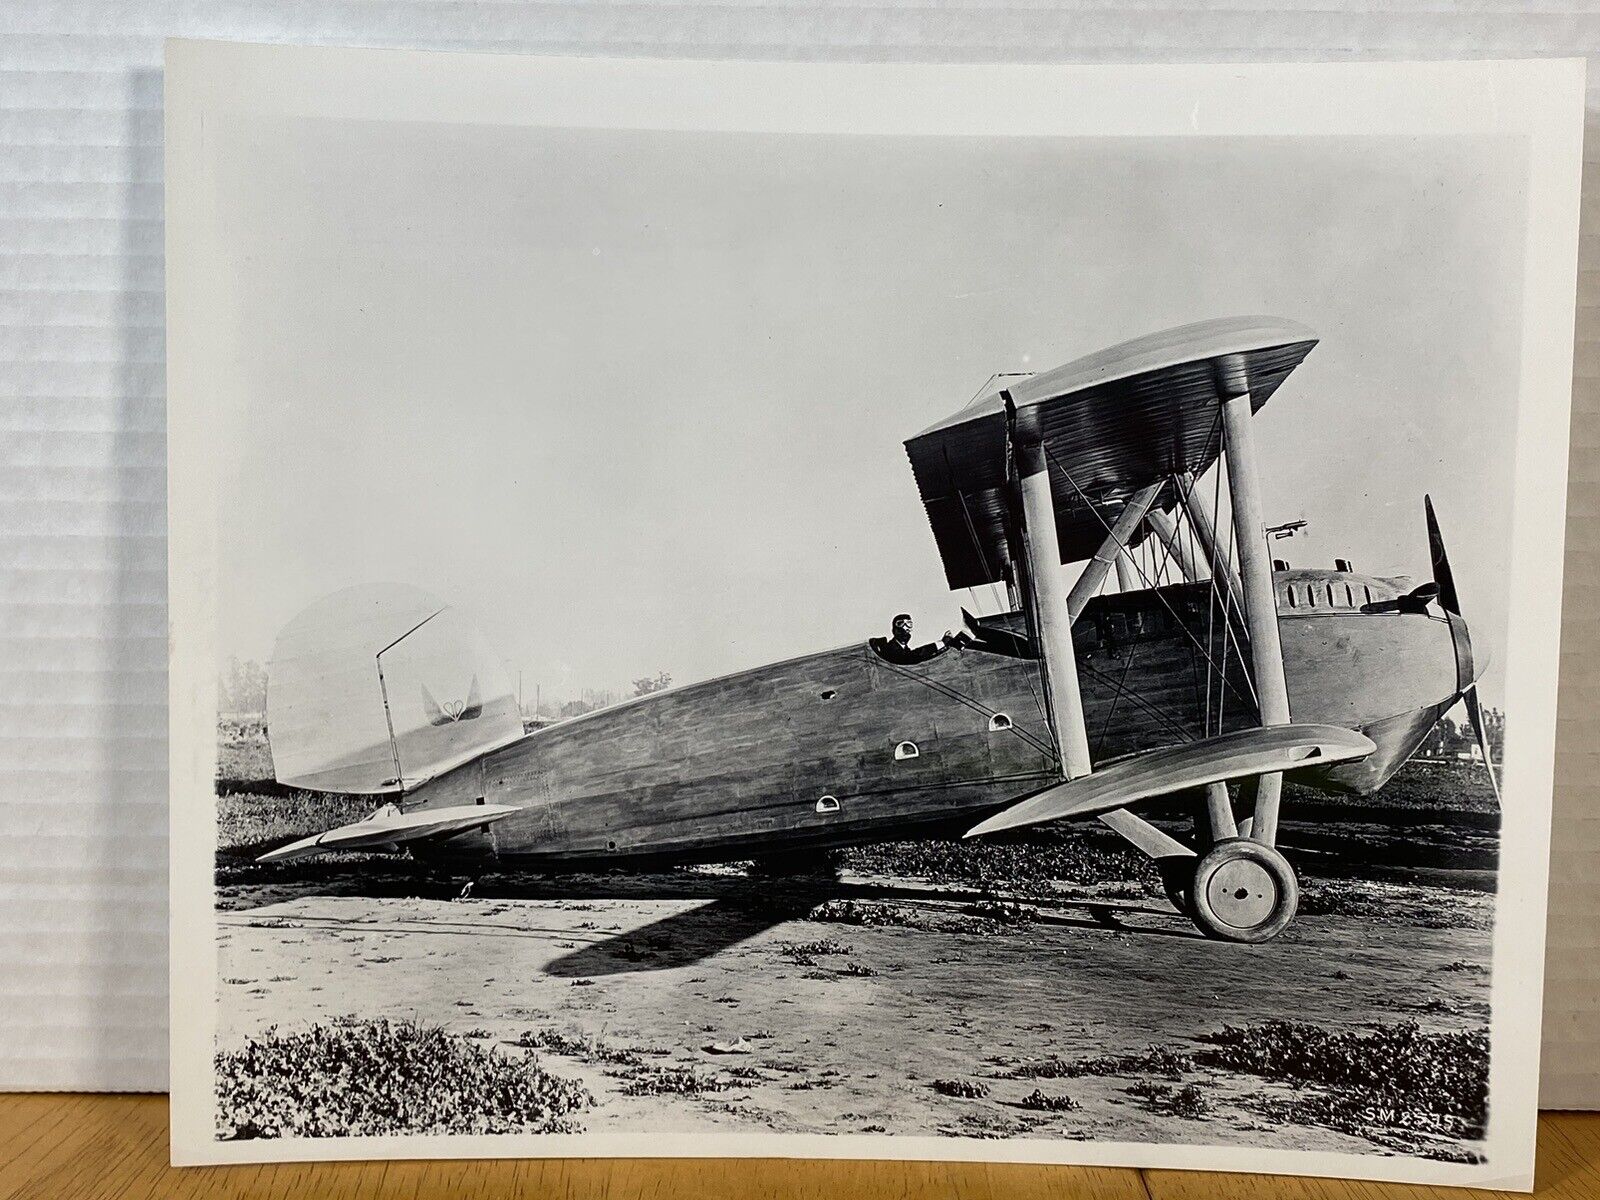 Douglas Company Davis-Douglas Cloudster 1920s biplane aircraft.